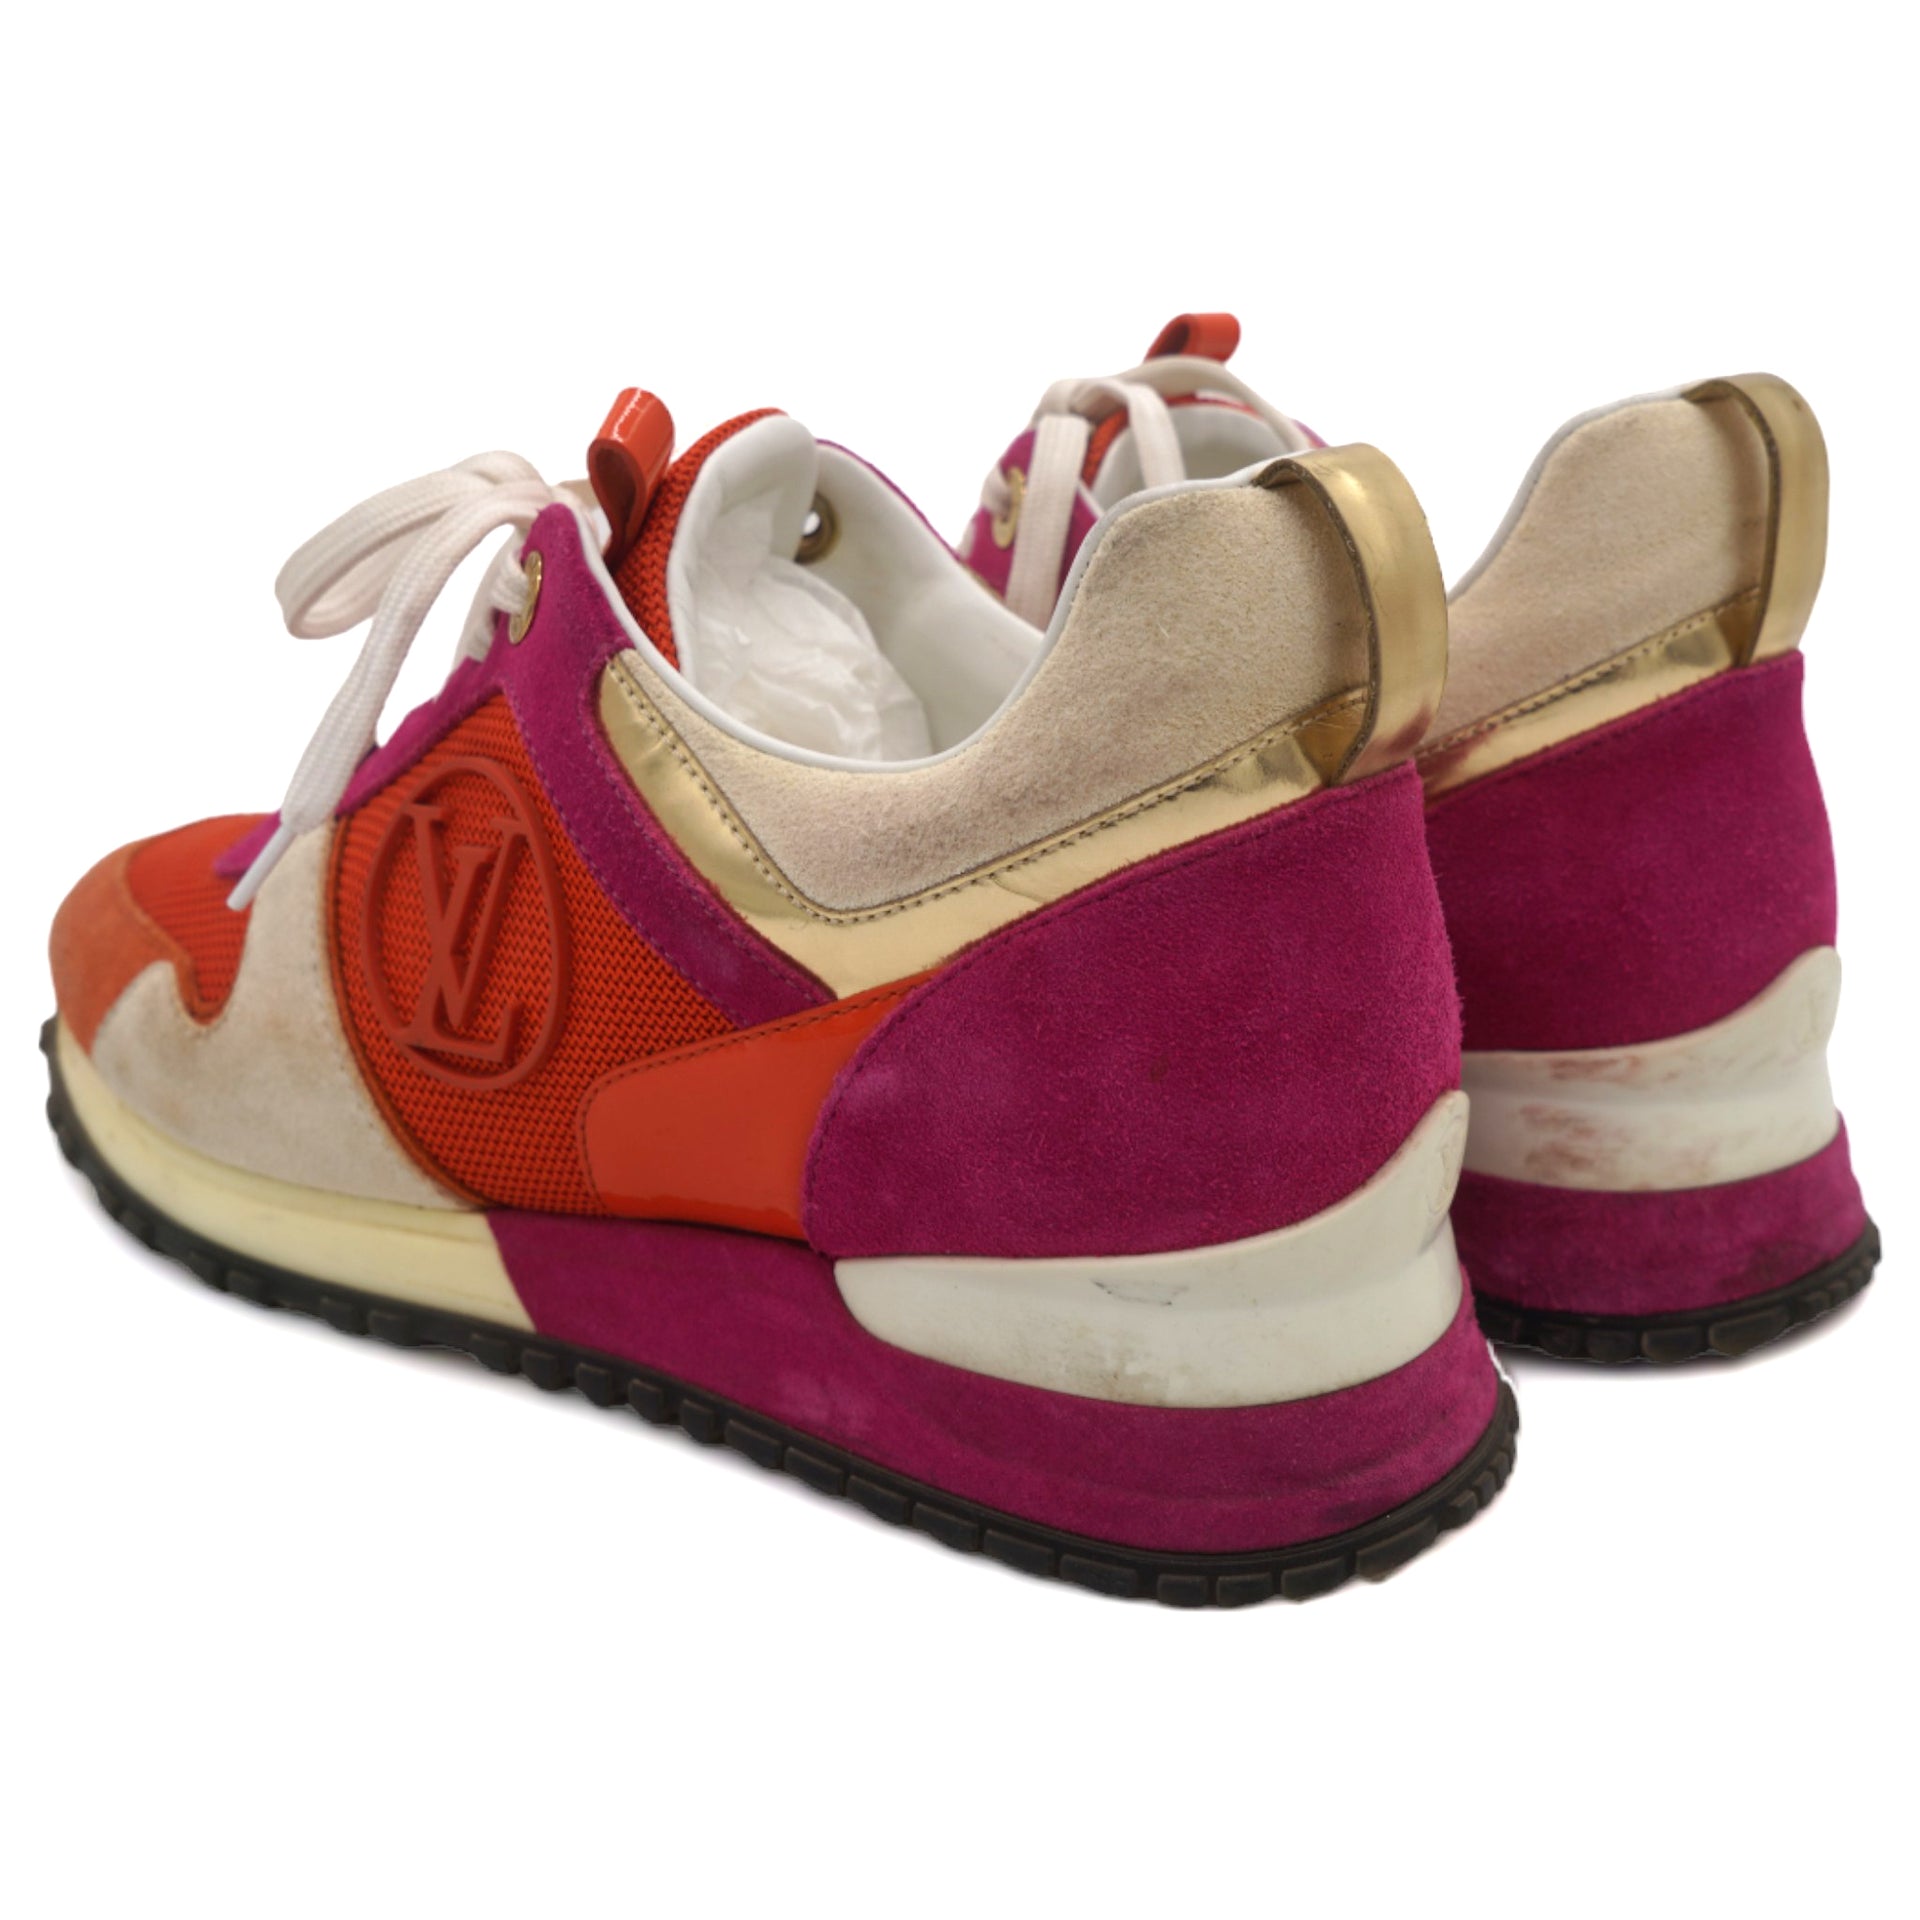 Run Away Sneakers Orange Pink Suede 36